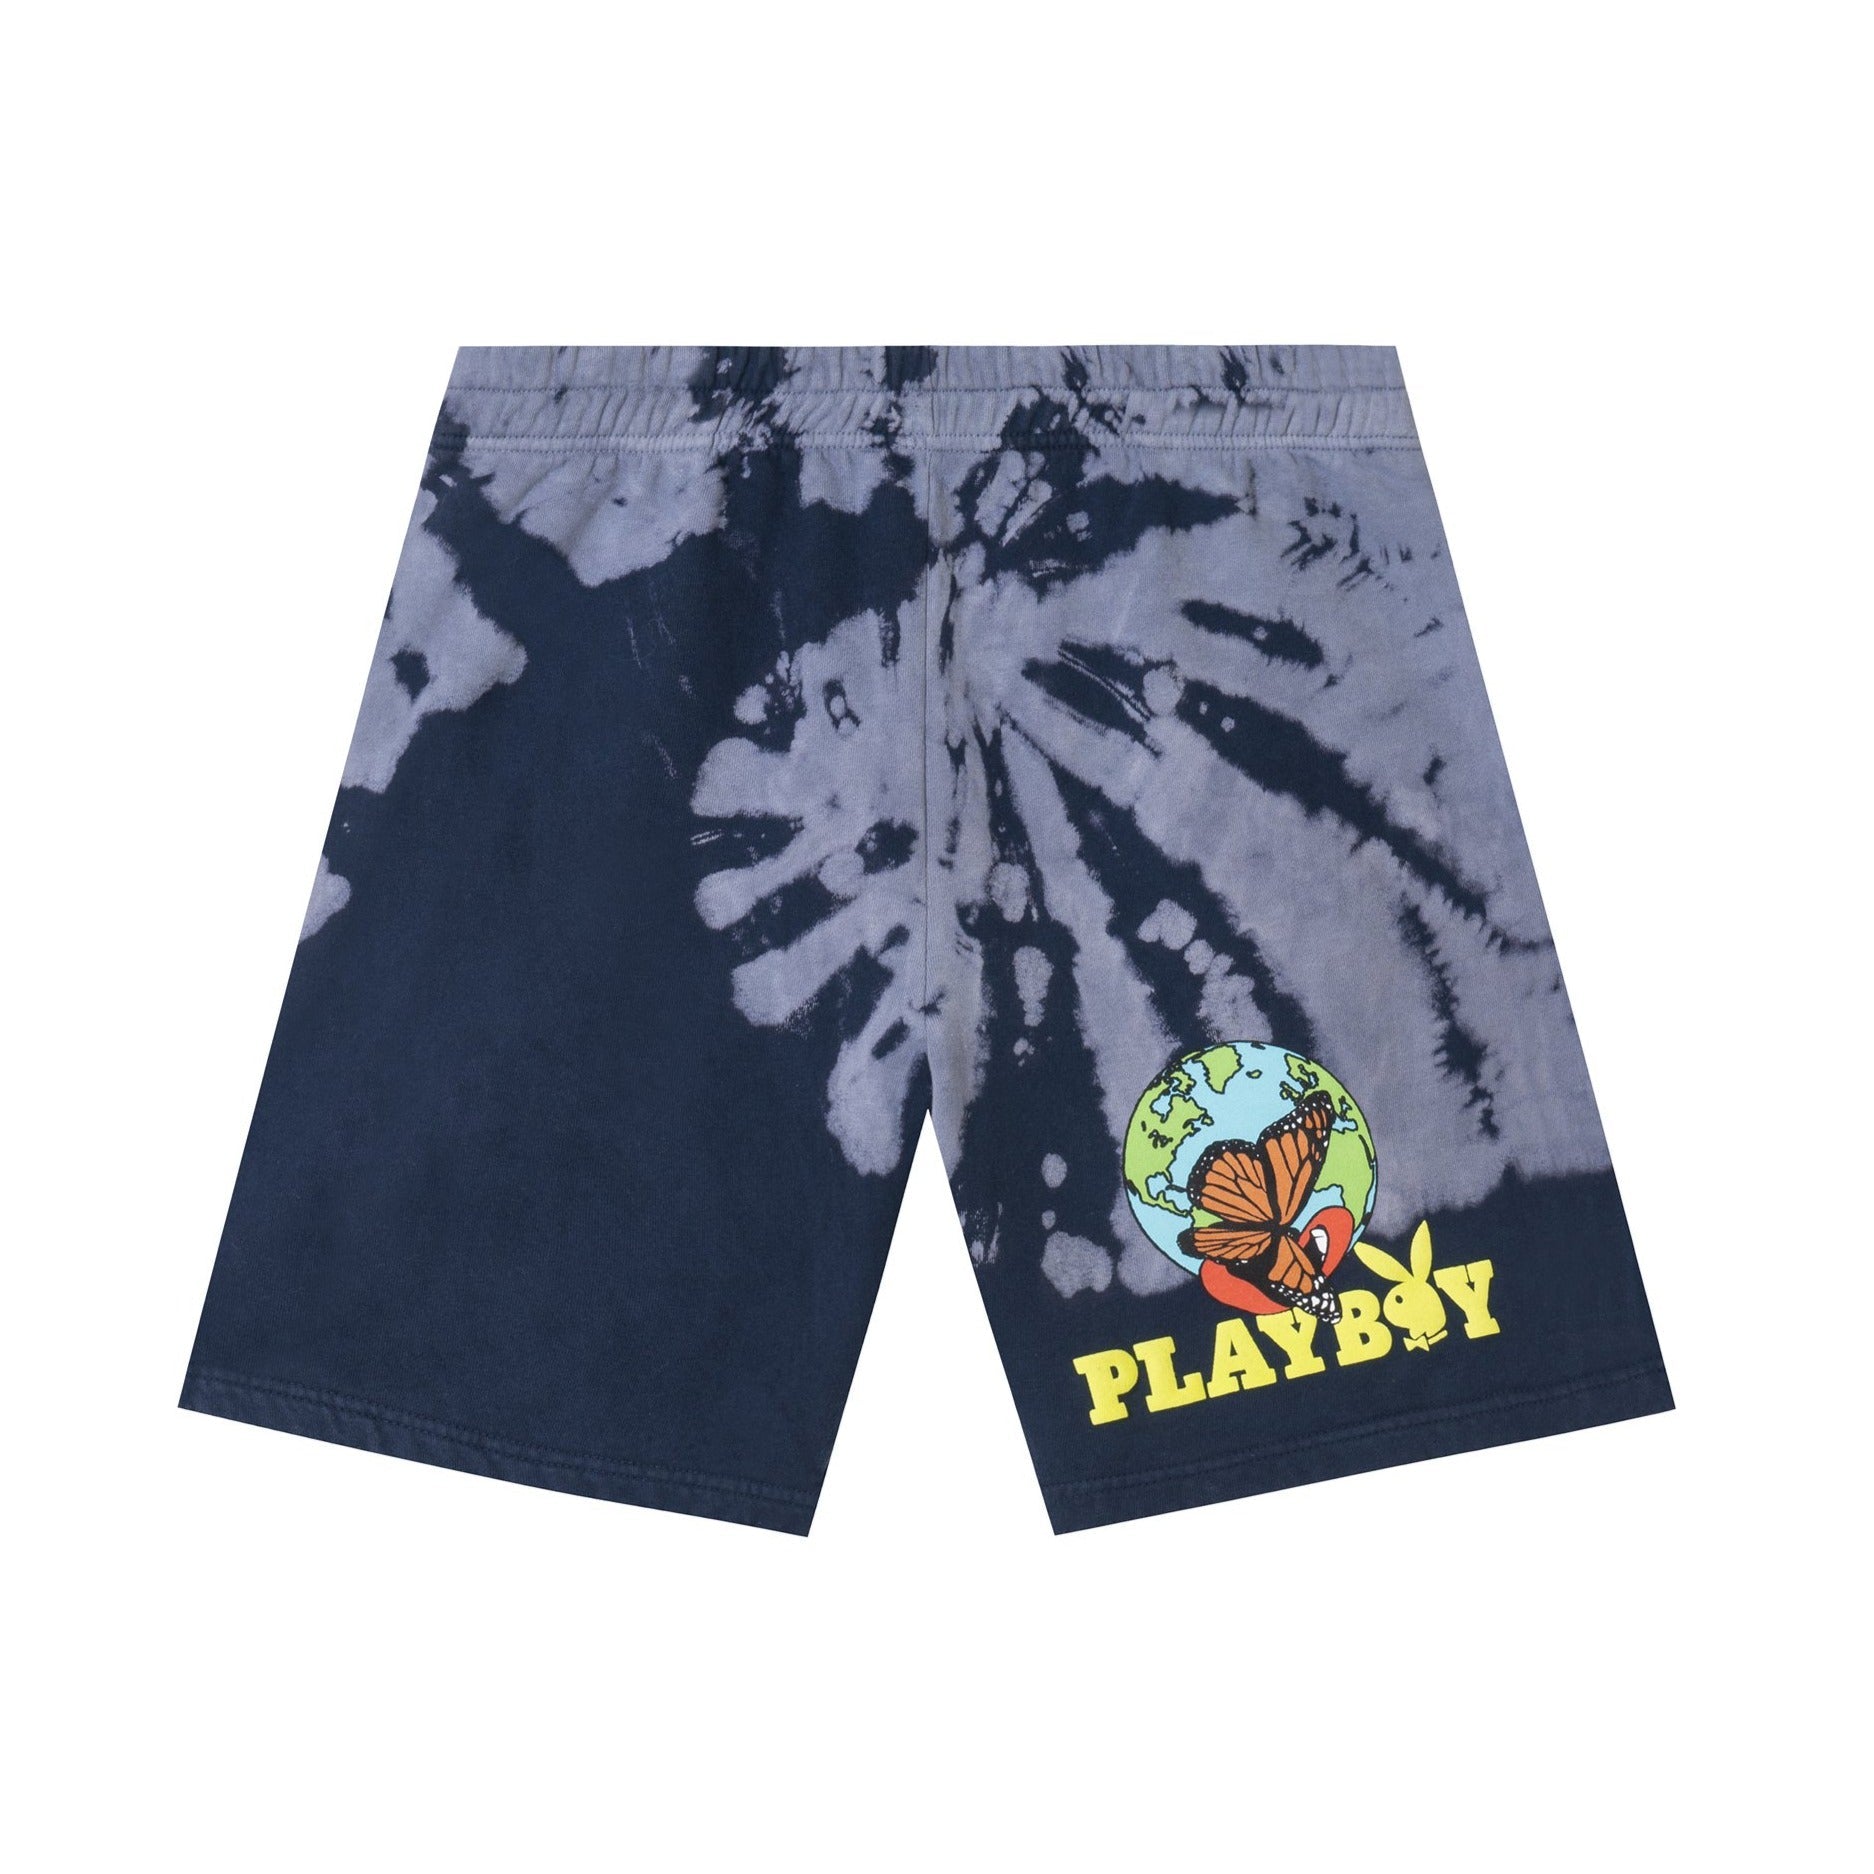 Collection Sweat Playboy Tie-Dye Au Shorts: Captivating Naturel